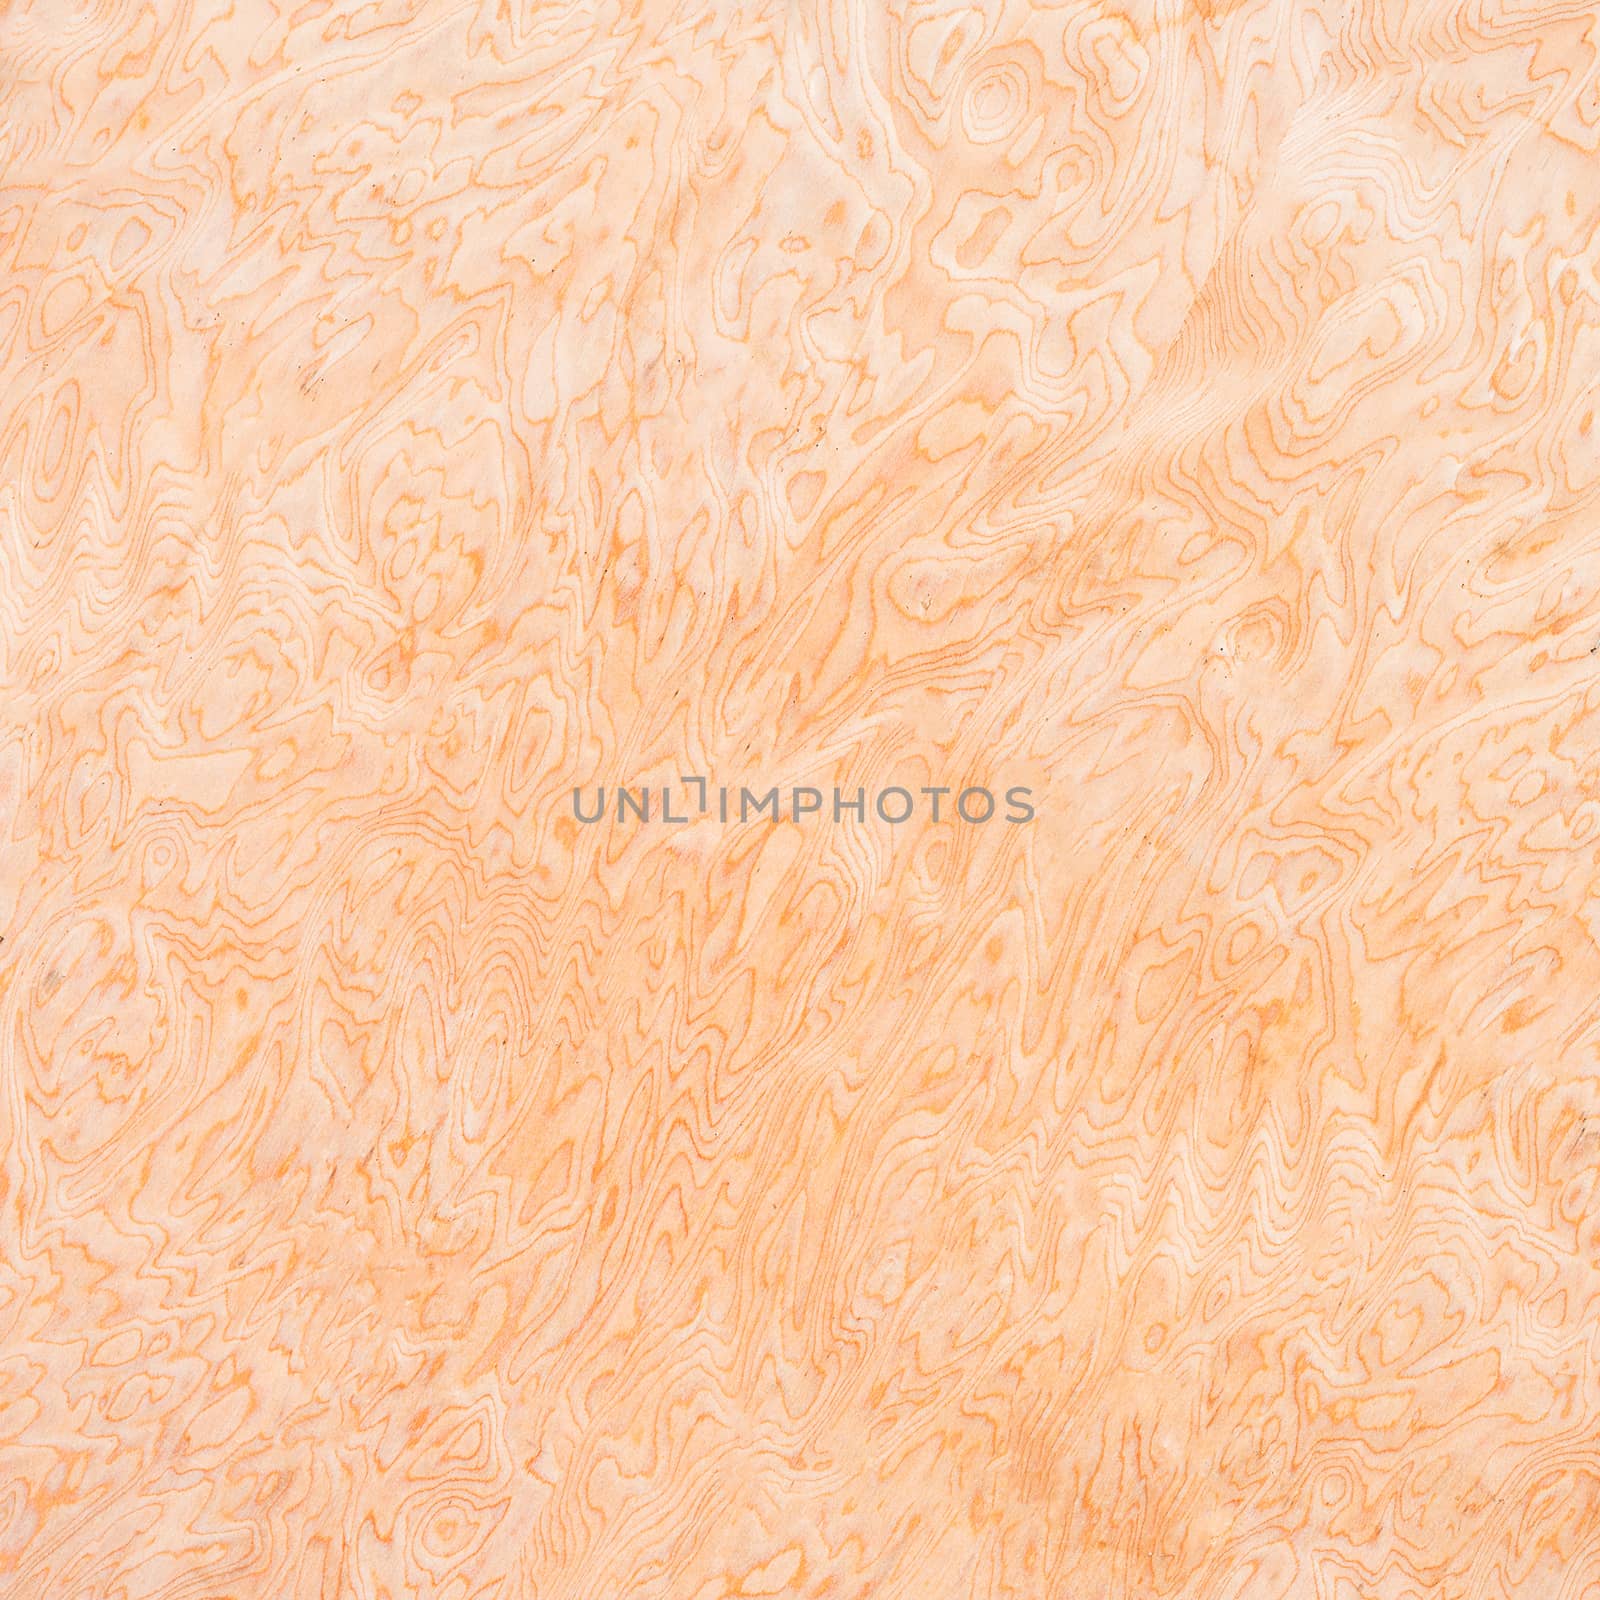 High resolution natural woodgrain texture by nopparats